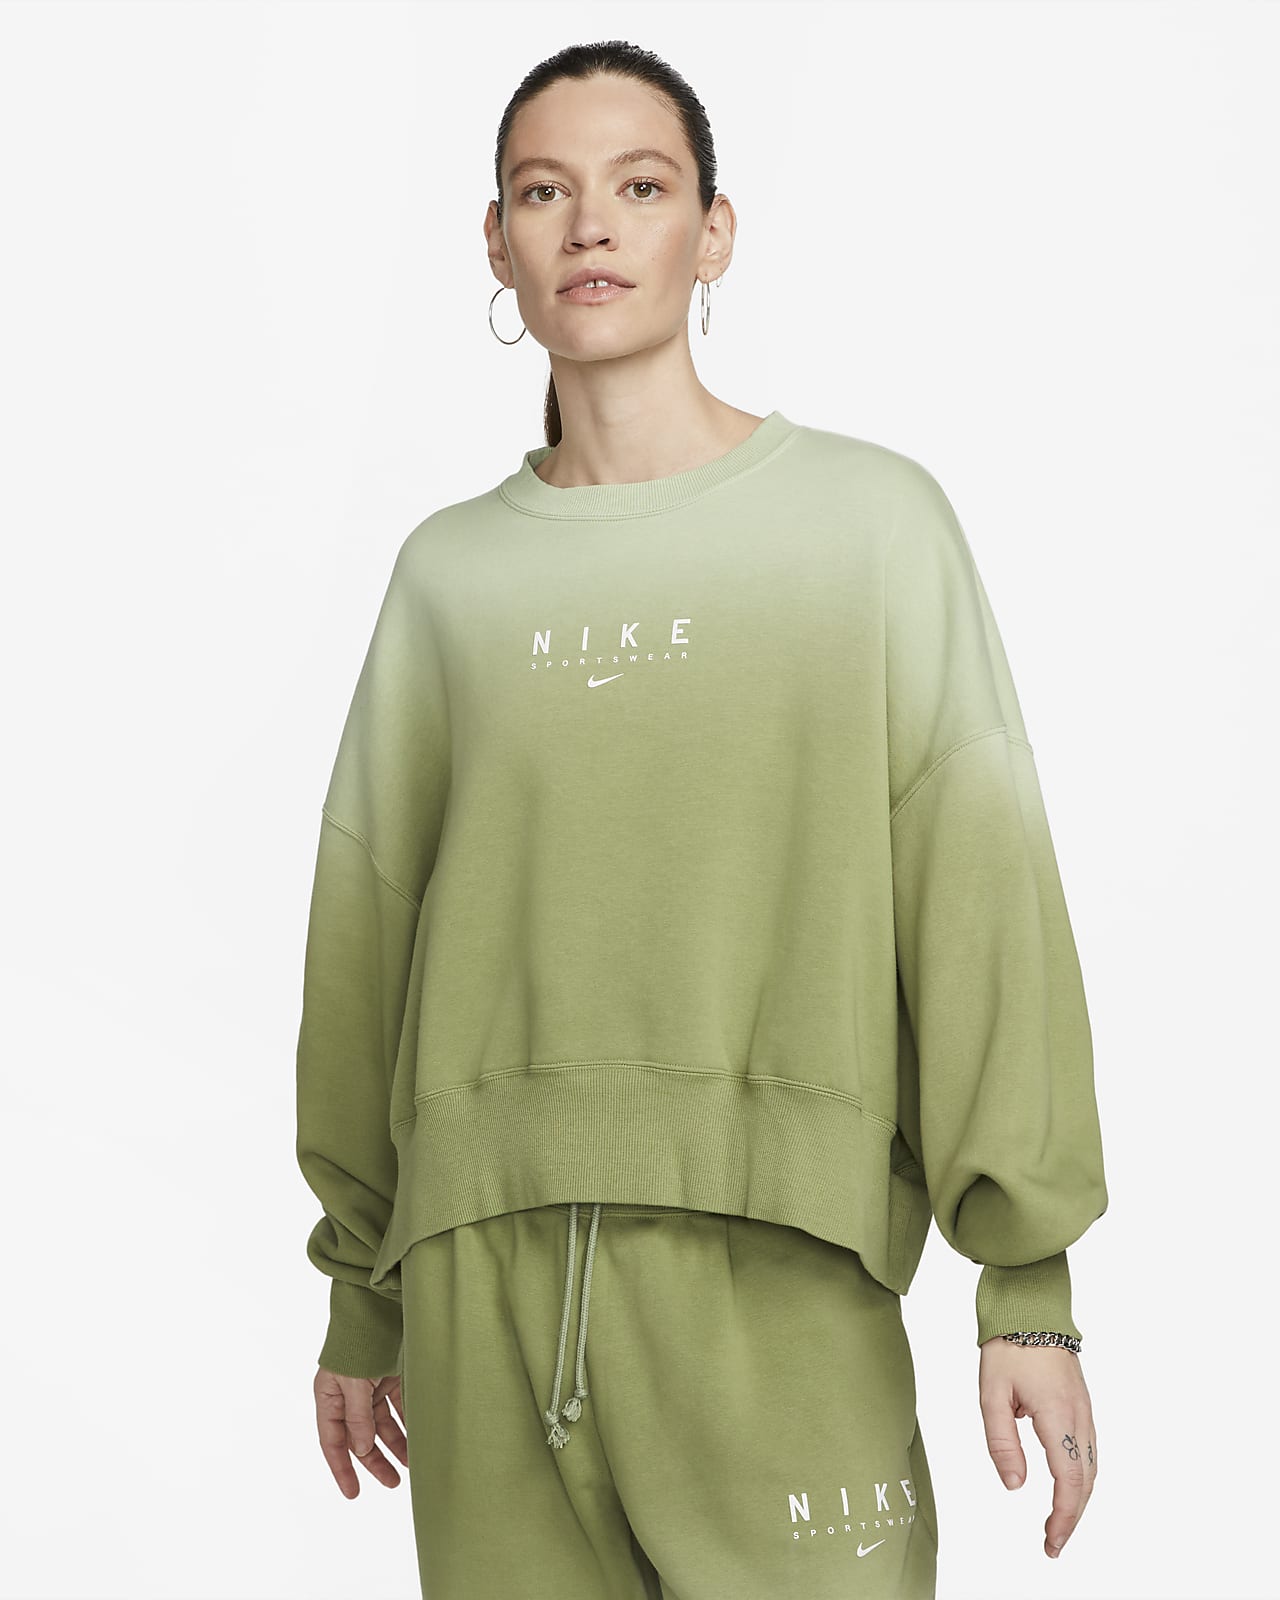 Get Cozy in Olive Green Nike Sweatsuit for Women